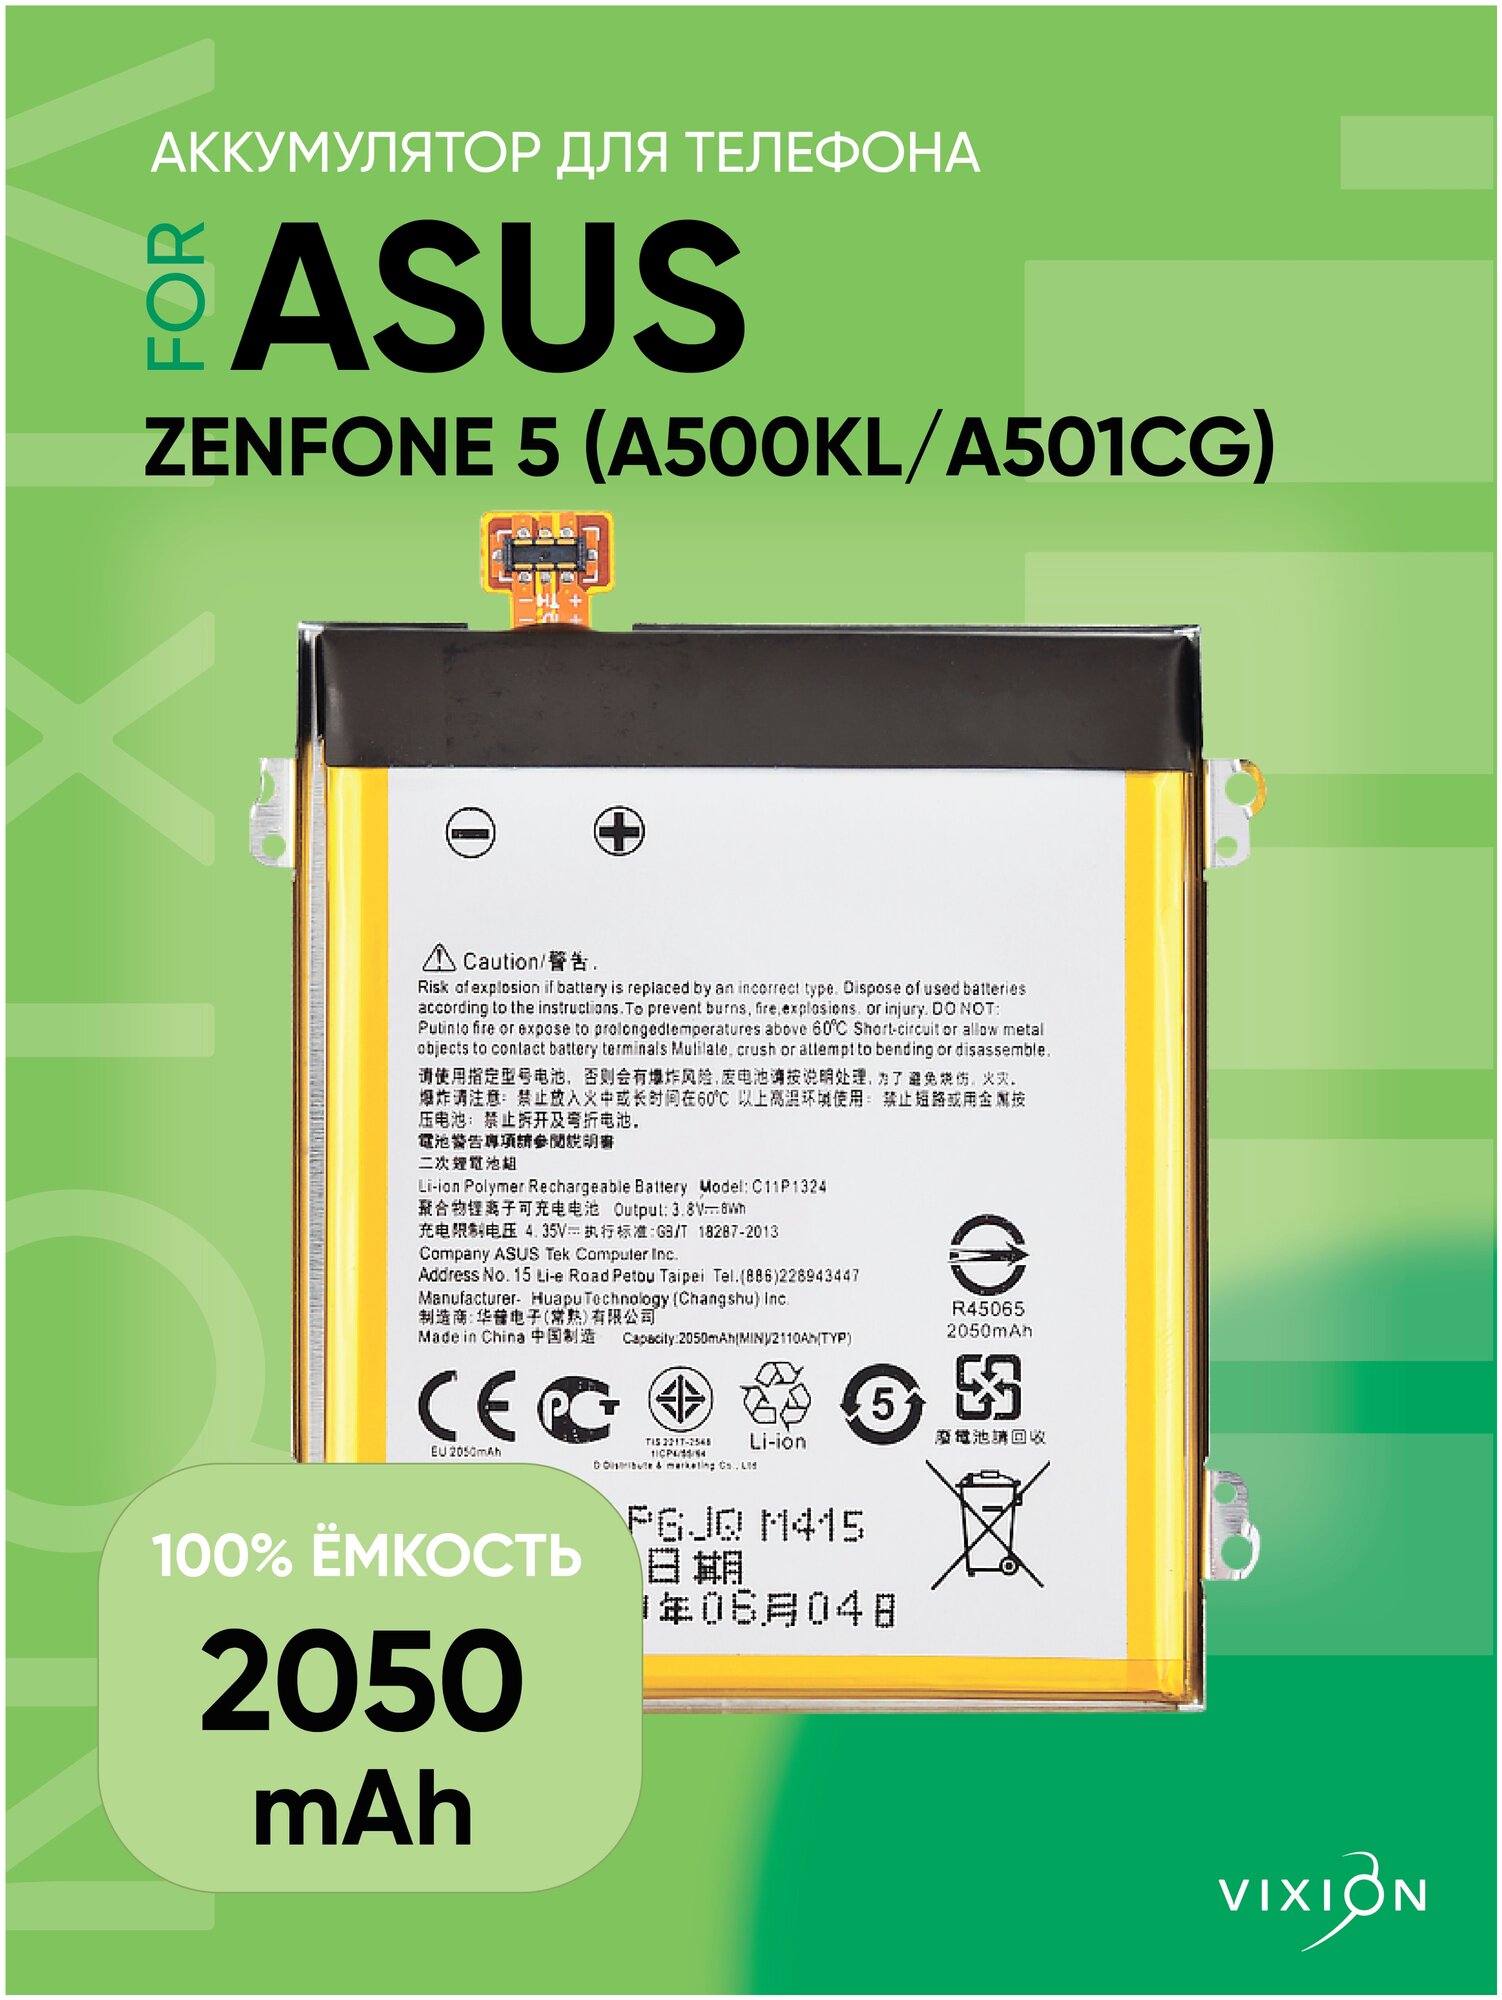 Аккумулятор для Asus Zenfone 5 / Асус Зенфон 5 / A500KL / A501CG (C11P1324) (VIXION)